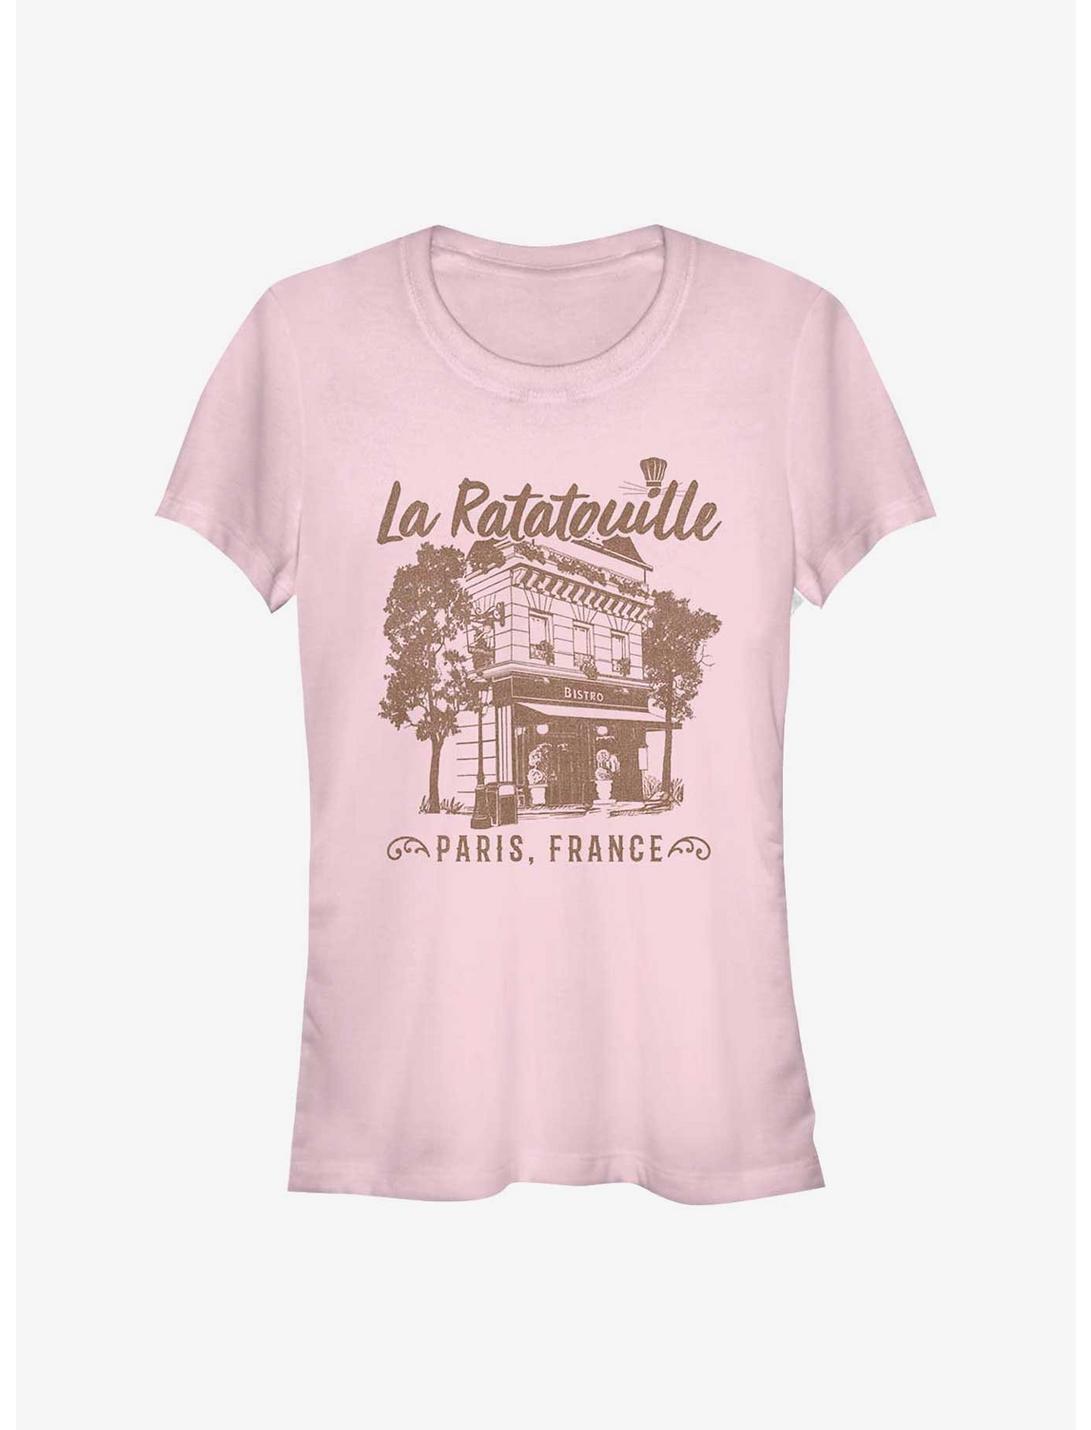 Disney Pixar Ratatouille Cafe Paris France Girls T-Shirt, LIGHT PINK, hi-res